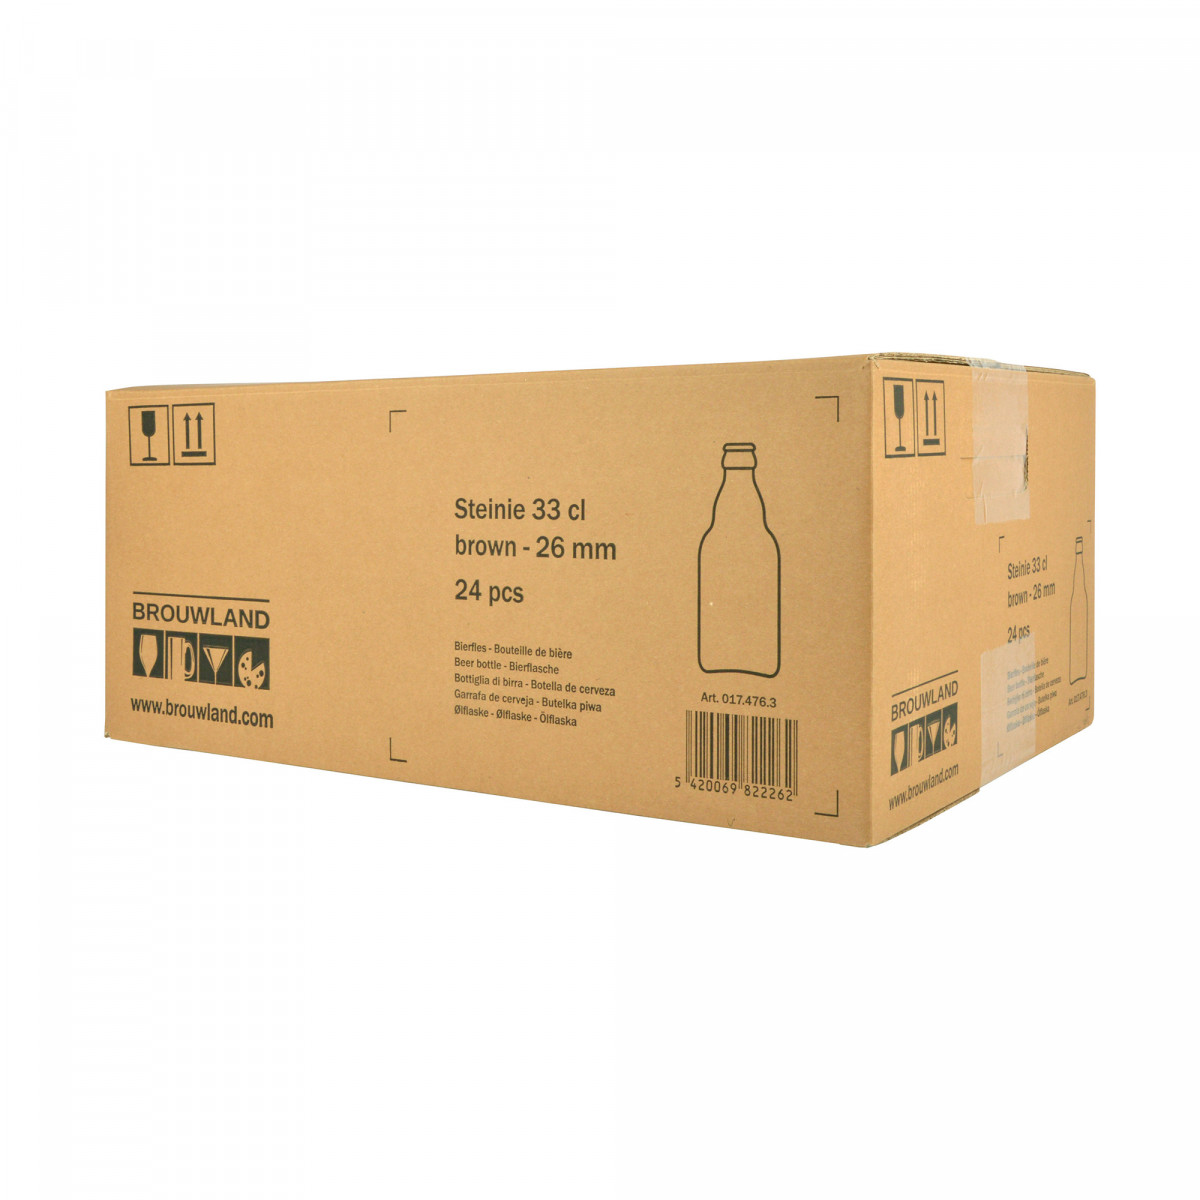 Steinie beer bottle 33 cl, brown, 26 mm, box 24 pcs